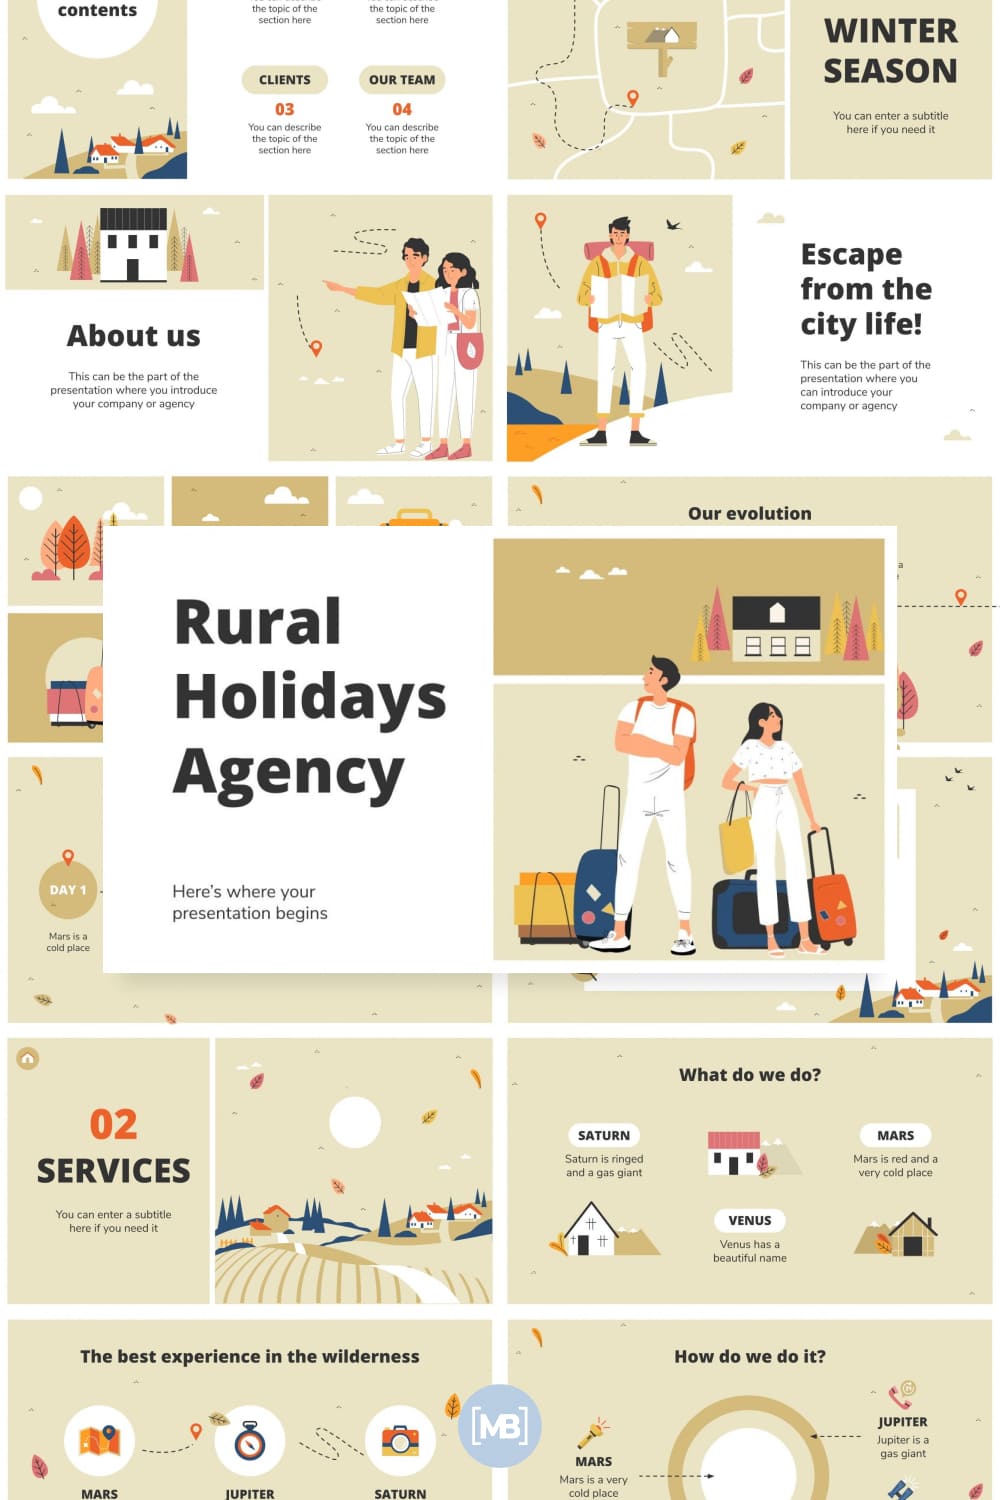 Rural holidays agency.